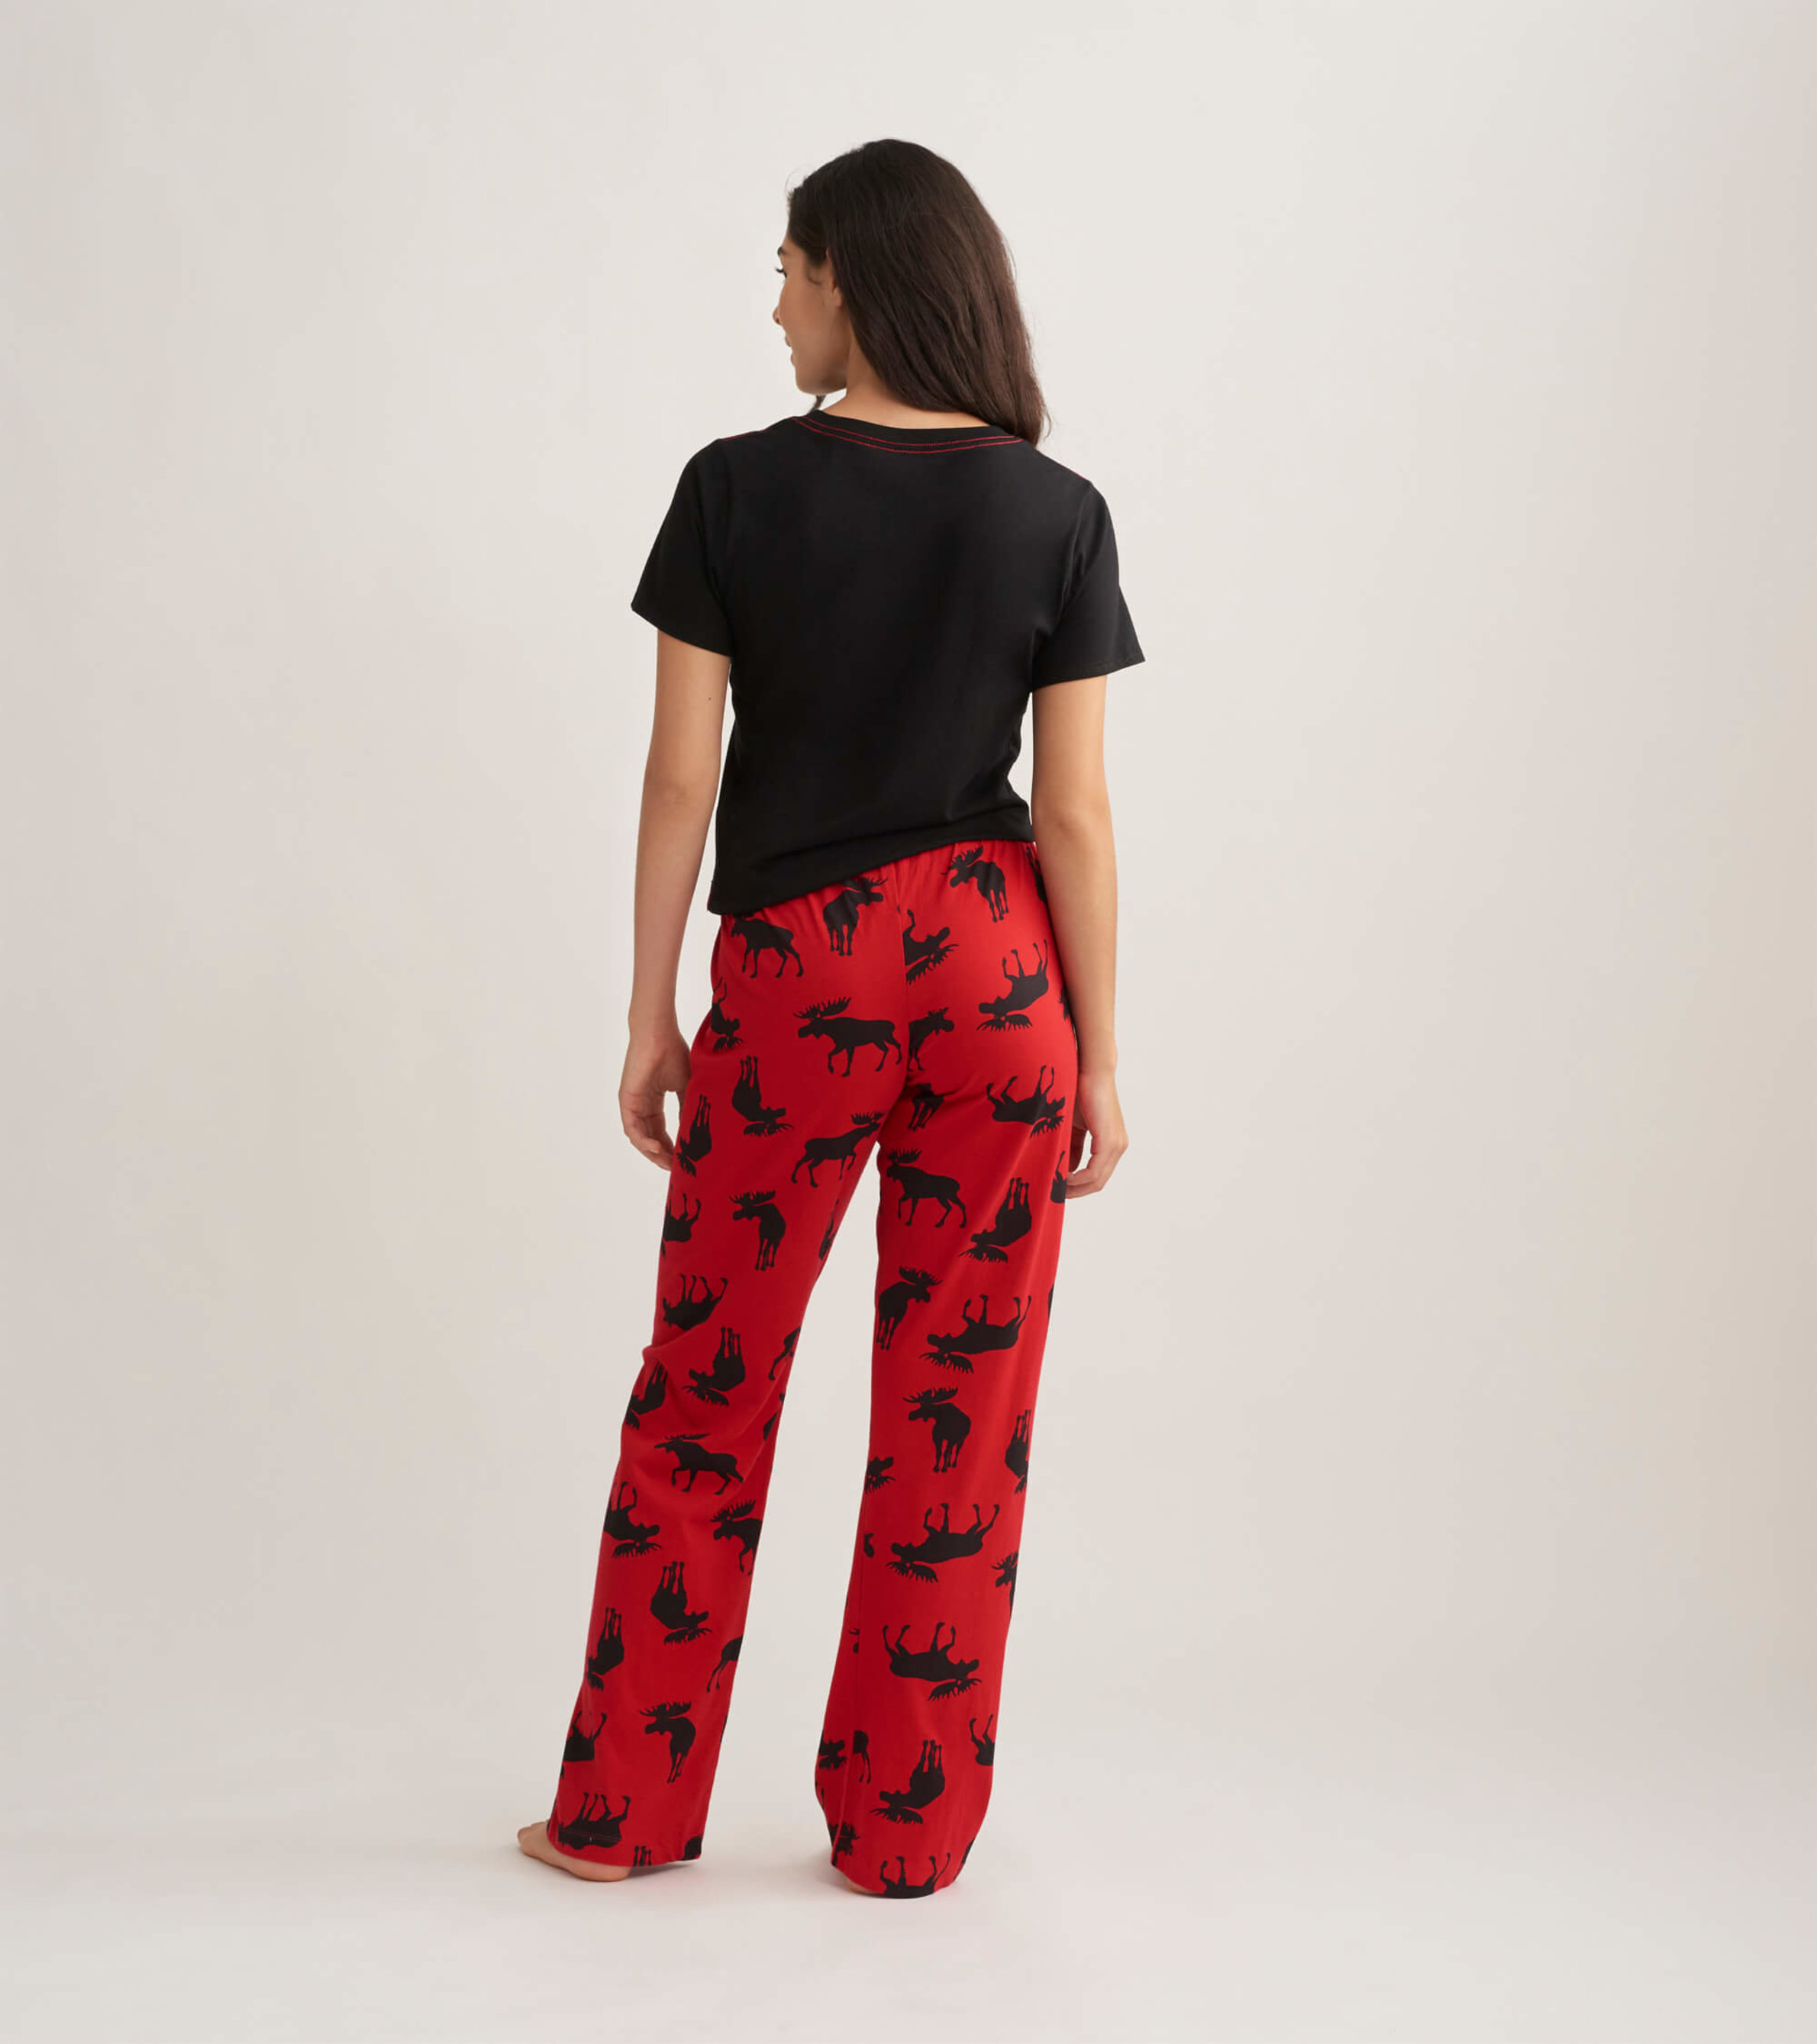 N /D Women's Plaid Pajama Pants Pj Bottoms Elastic Waistband